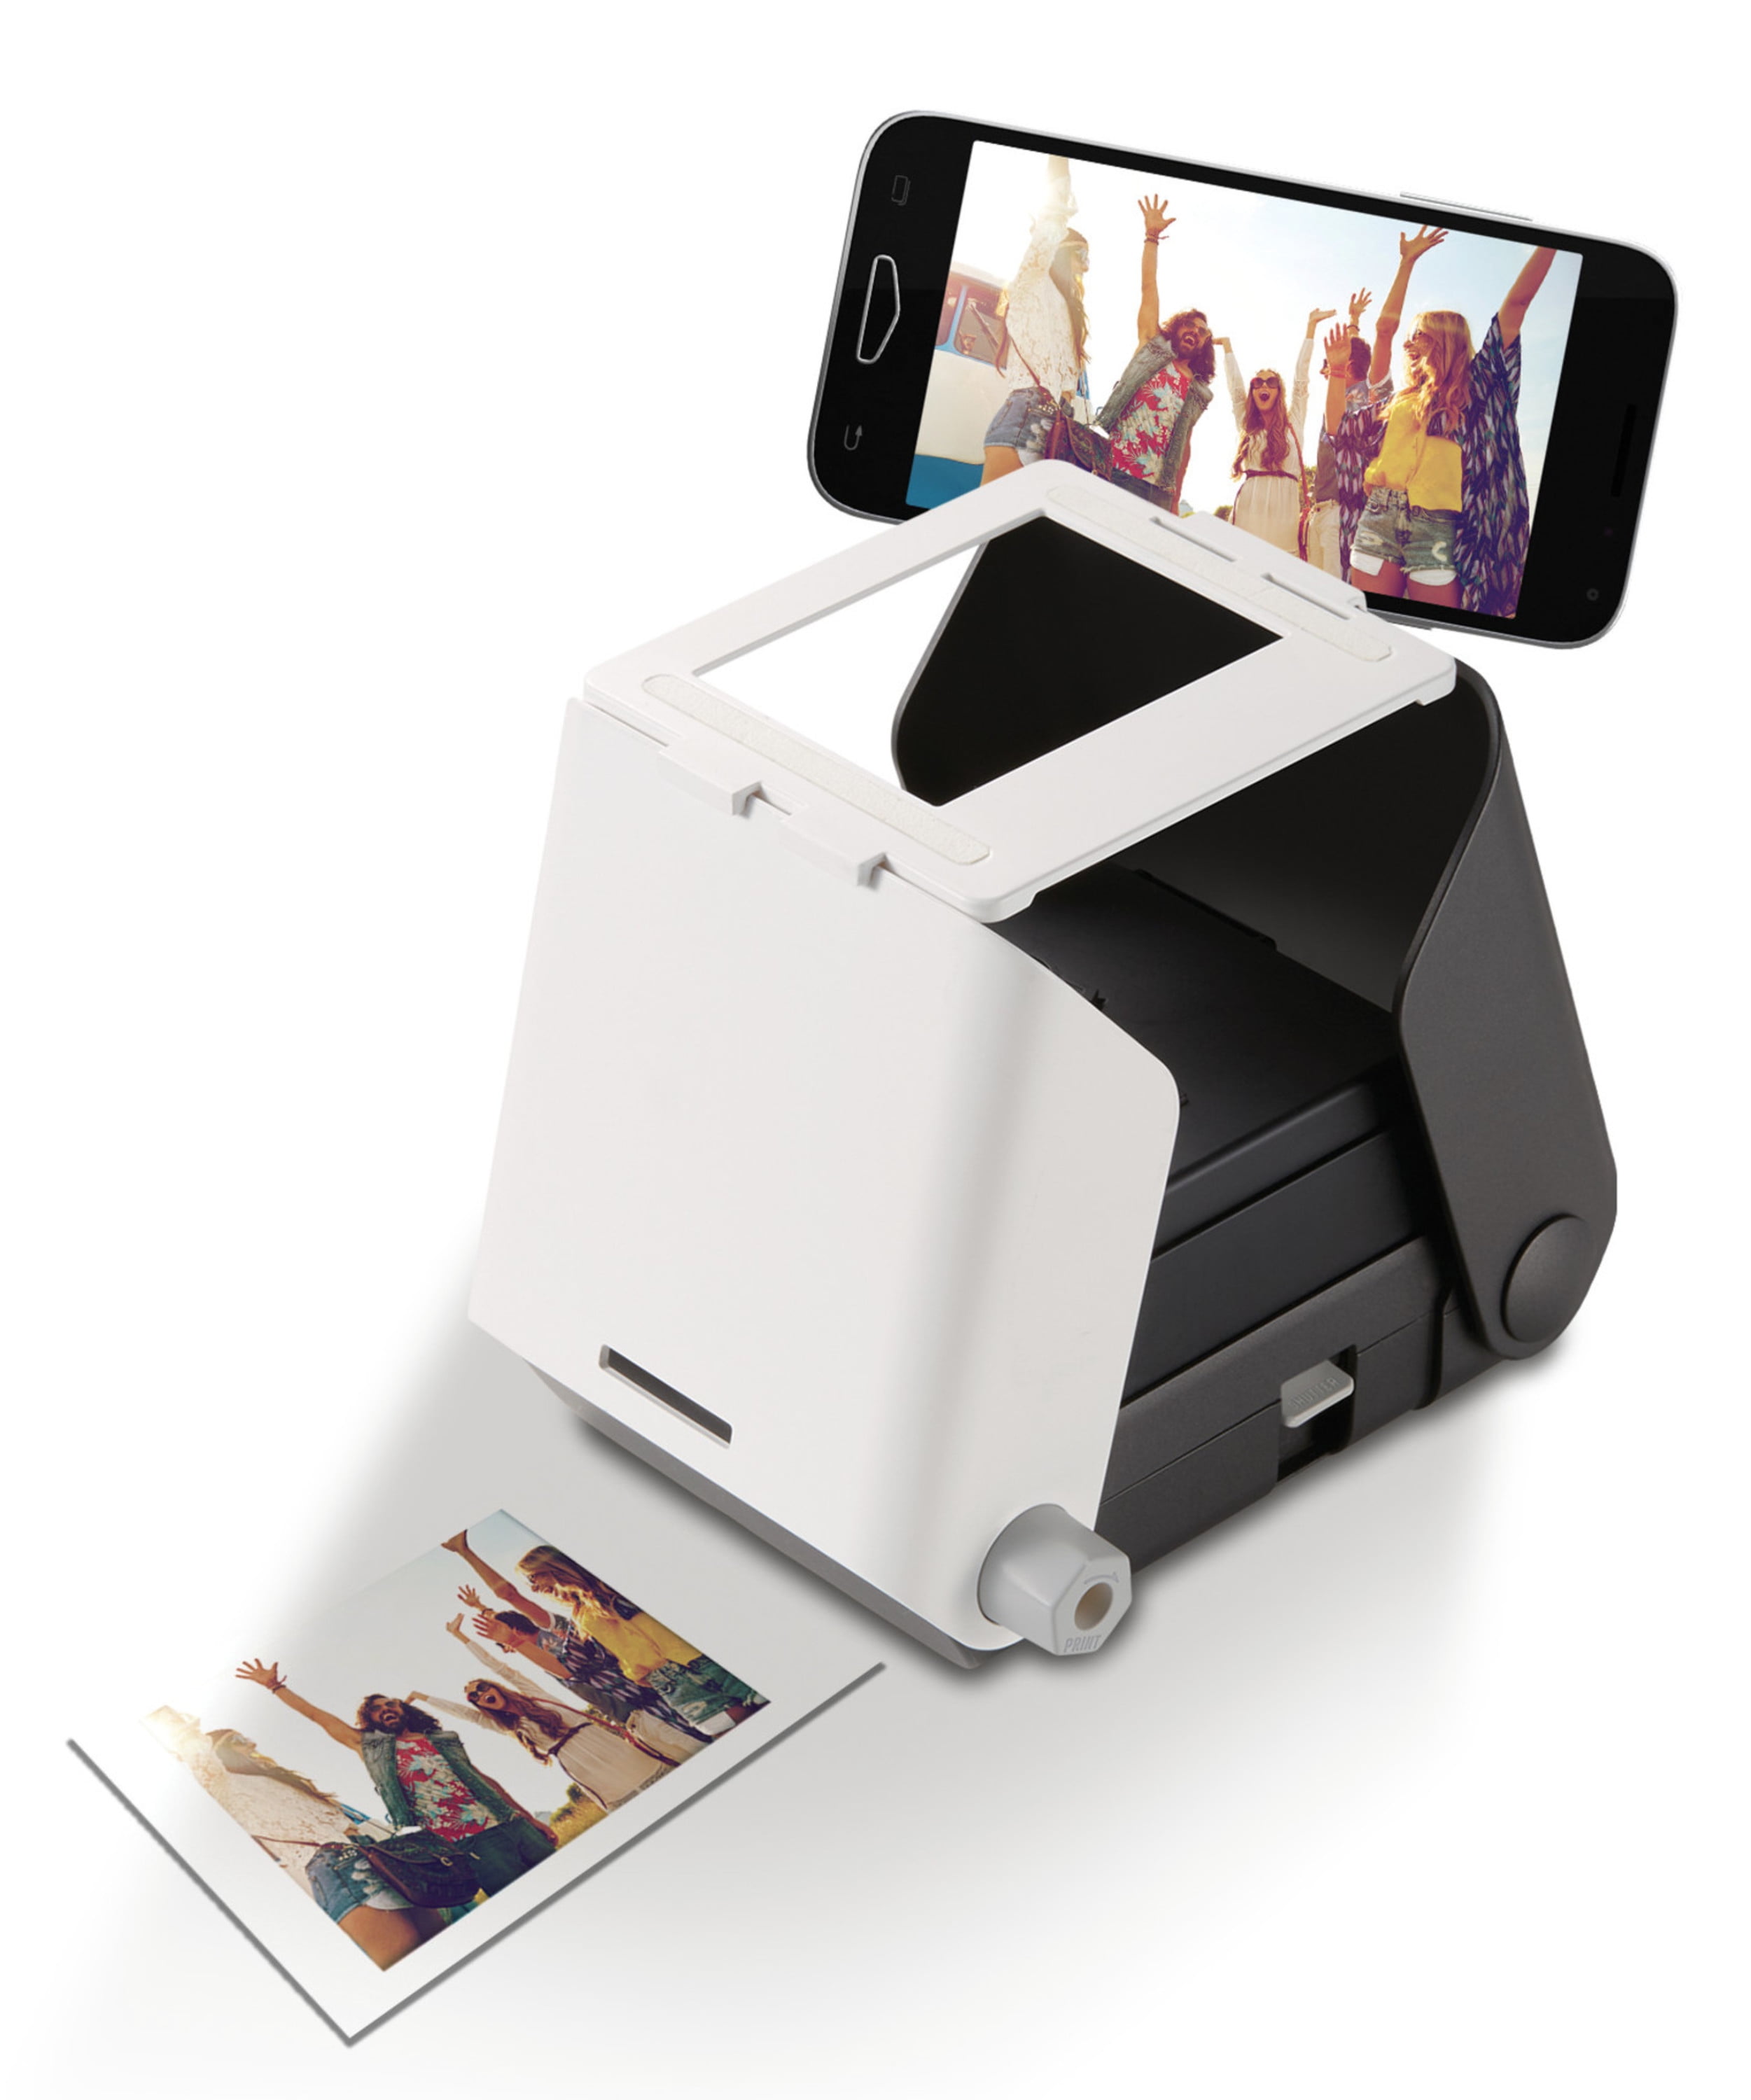 Gratyfied - Imprimante photo pour smartphone - Printer photo pour smartphone  